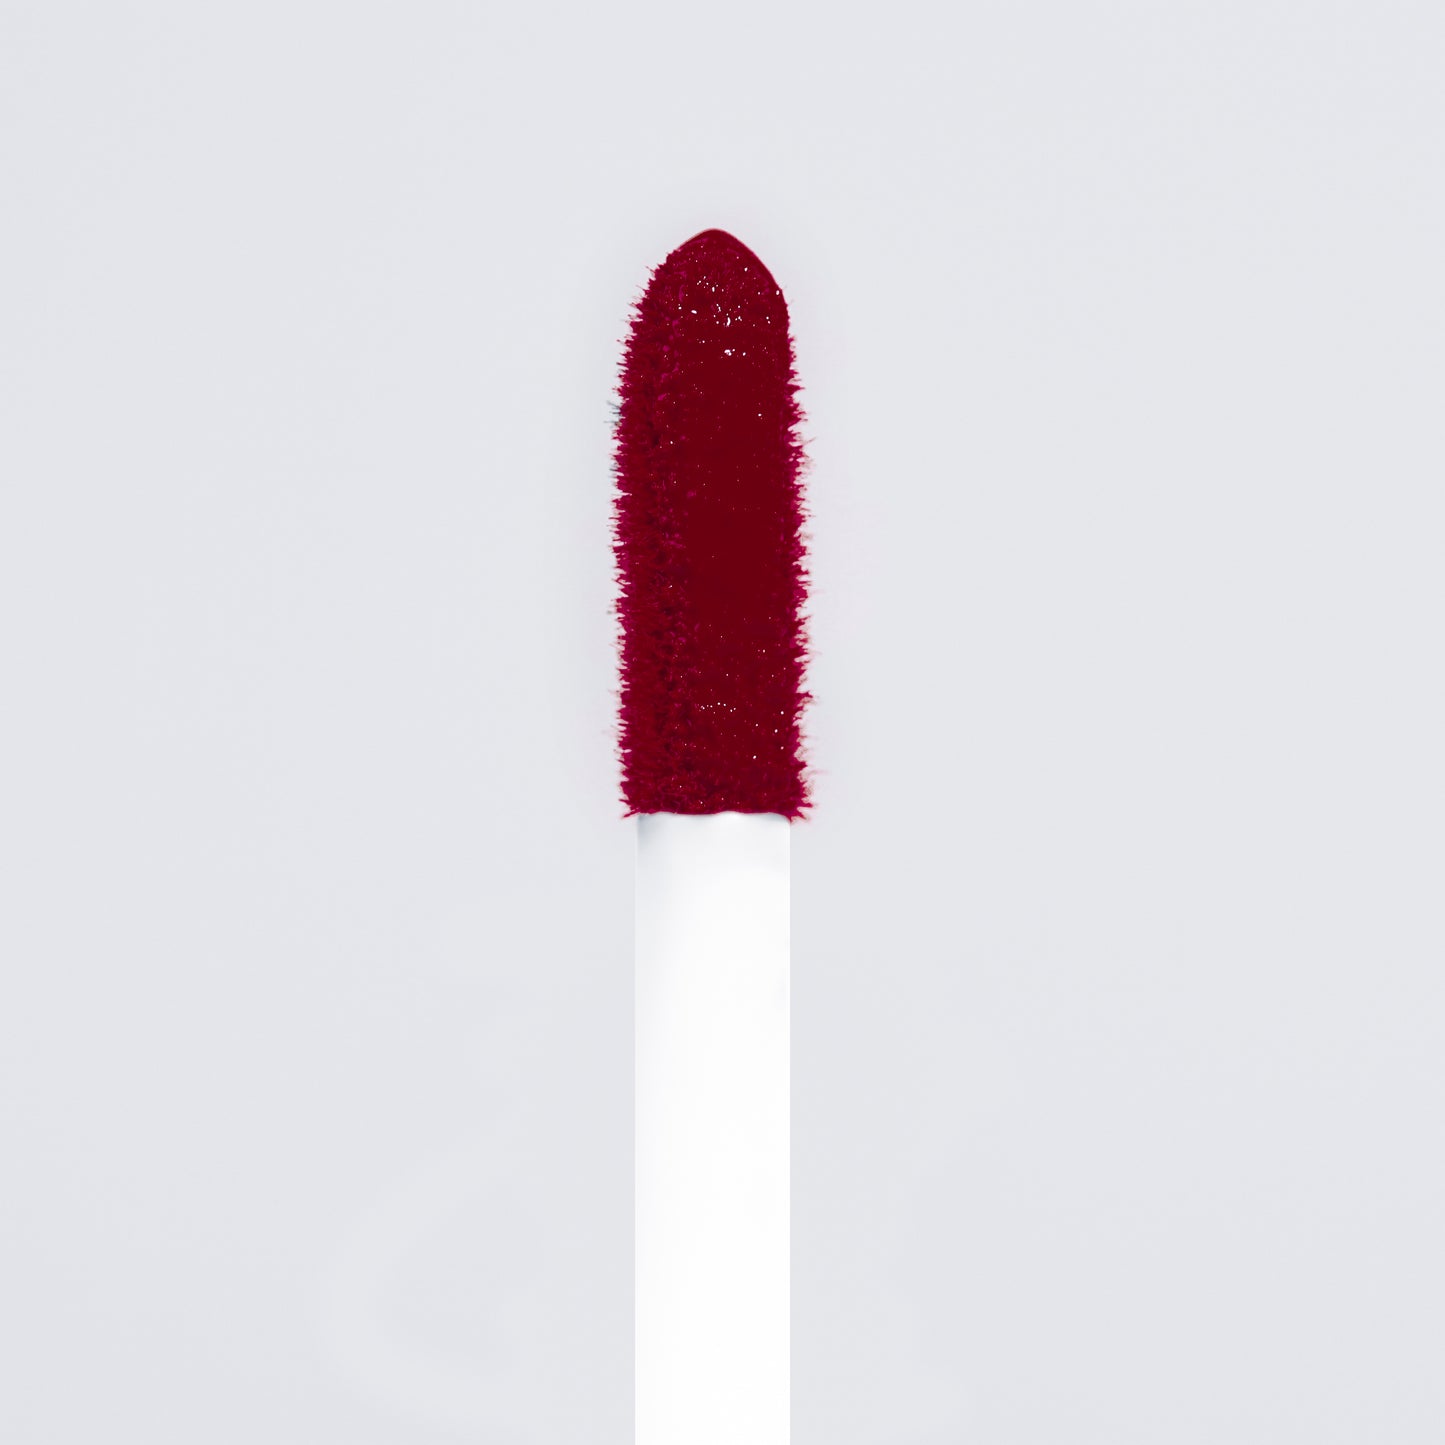 Lipstick by Samahmbeauty